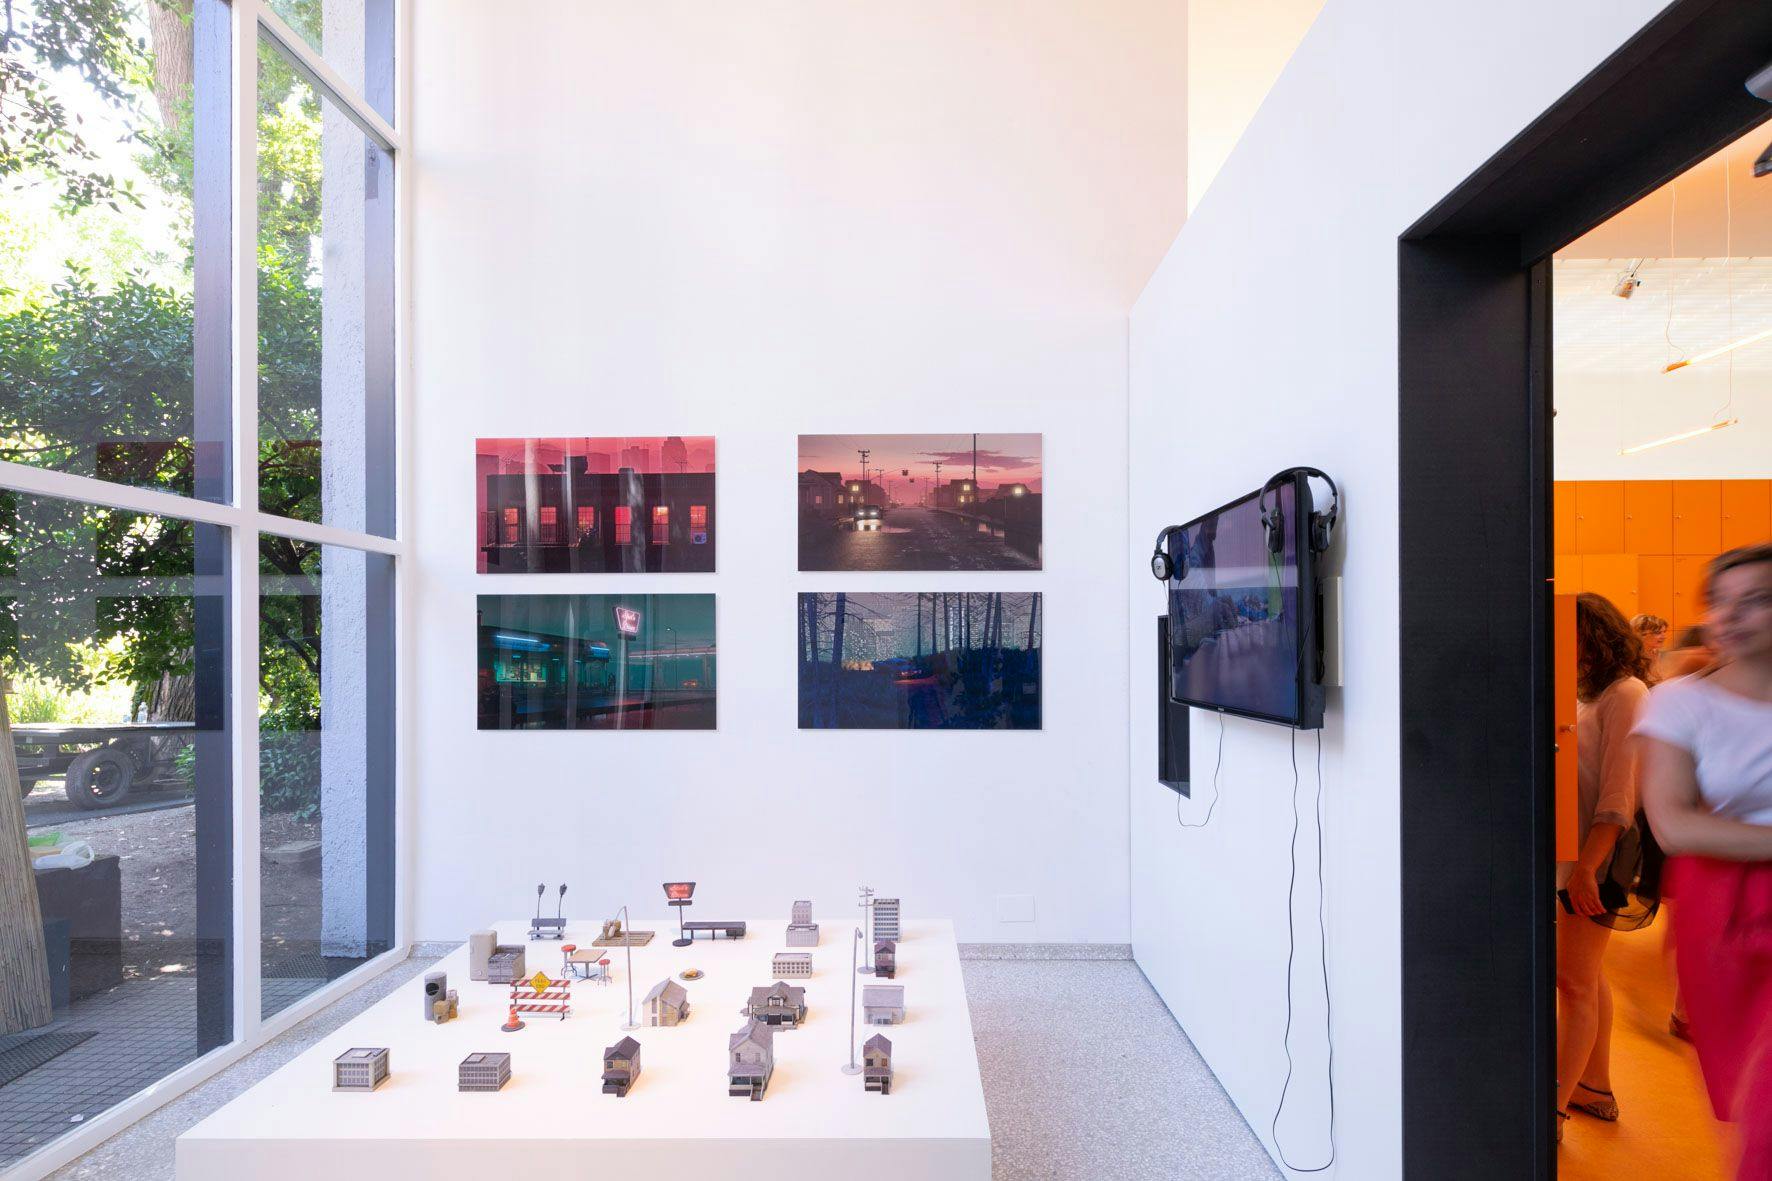  Renderlands installation, Liam Young. Dutch Pavilion WORK, BODY, LEISURE. 16th International Architecture Exhibition - La Biennale di Venezia, FREESPACE. Photo: Daria Scagliola 